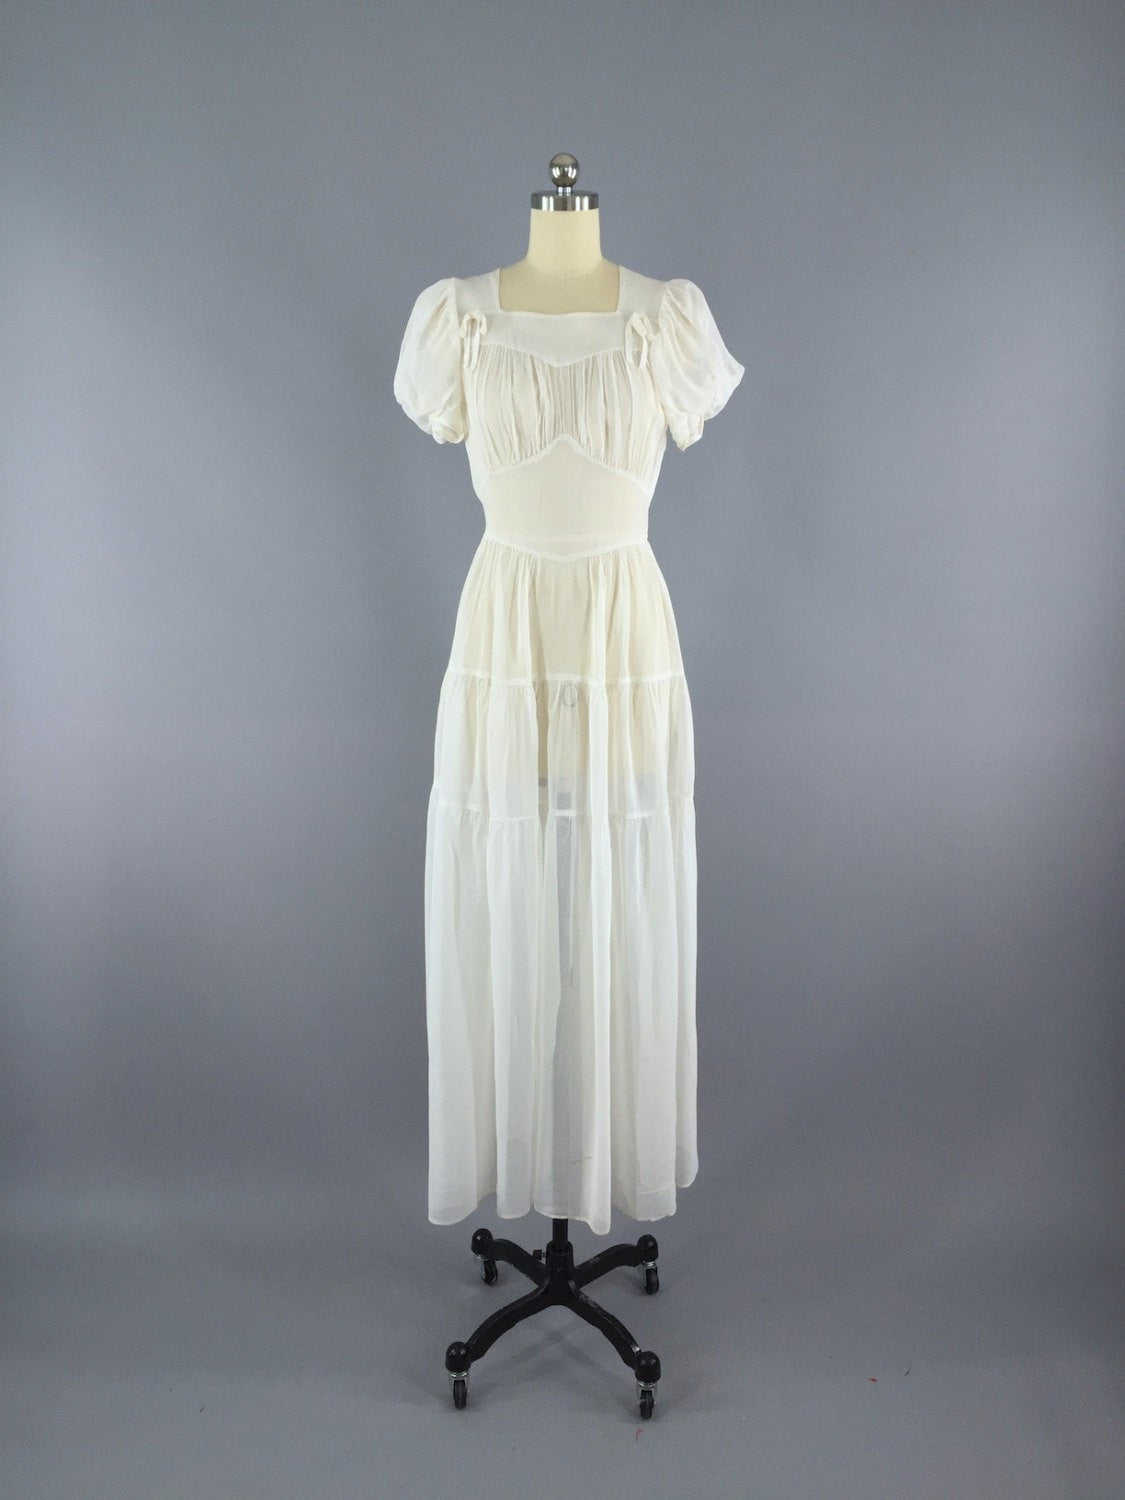 vintage 30s dress